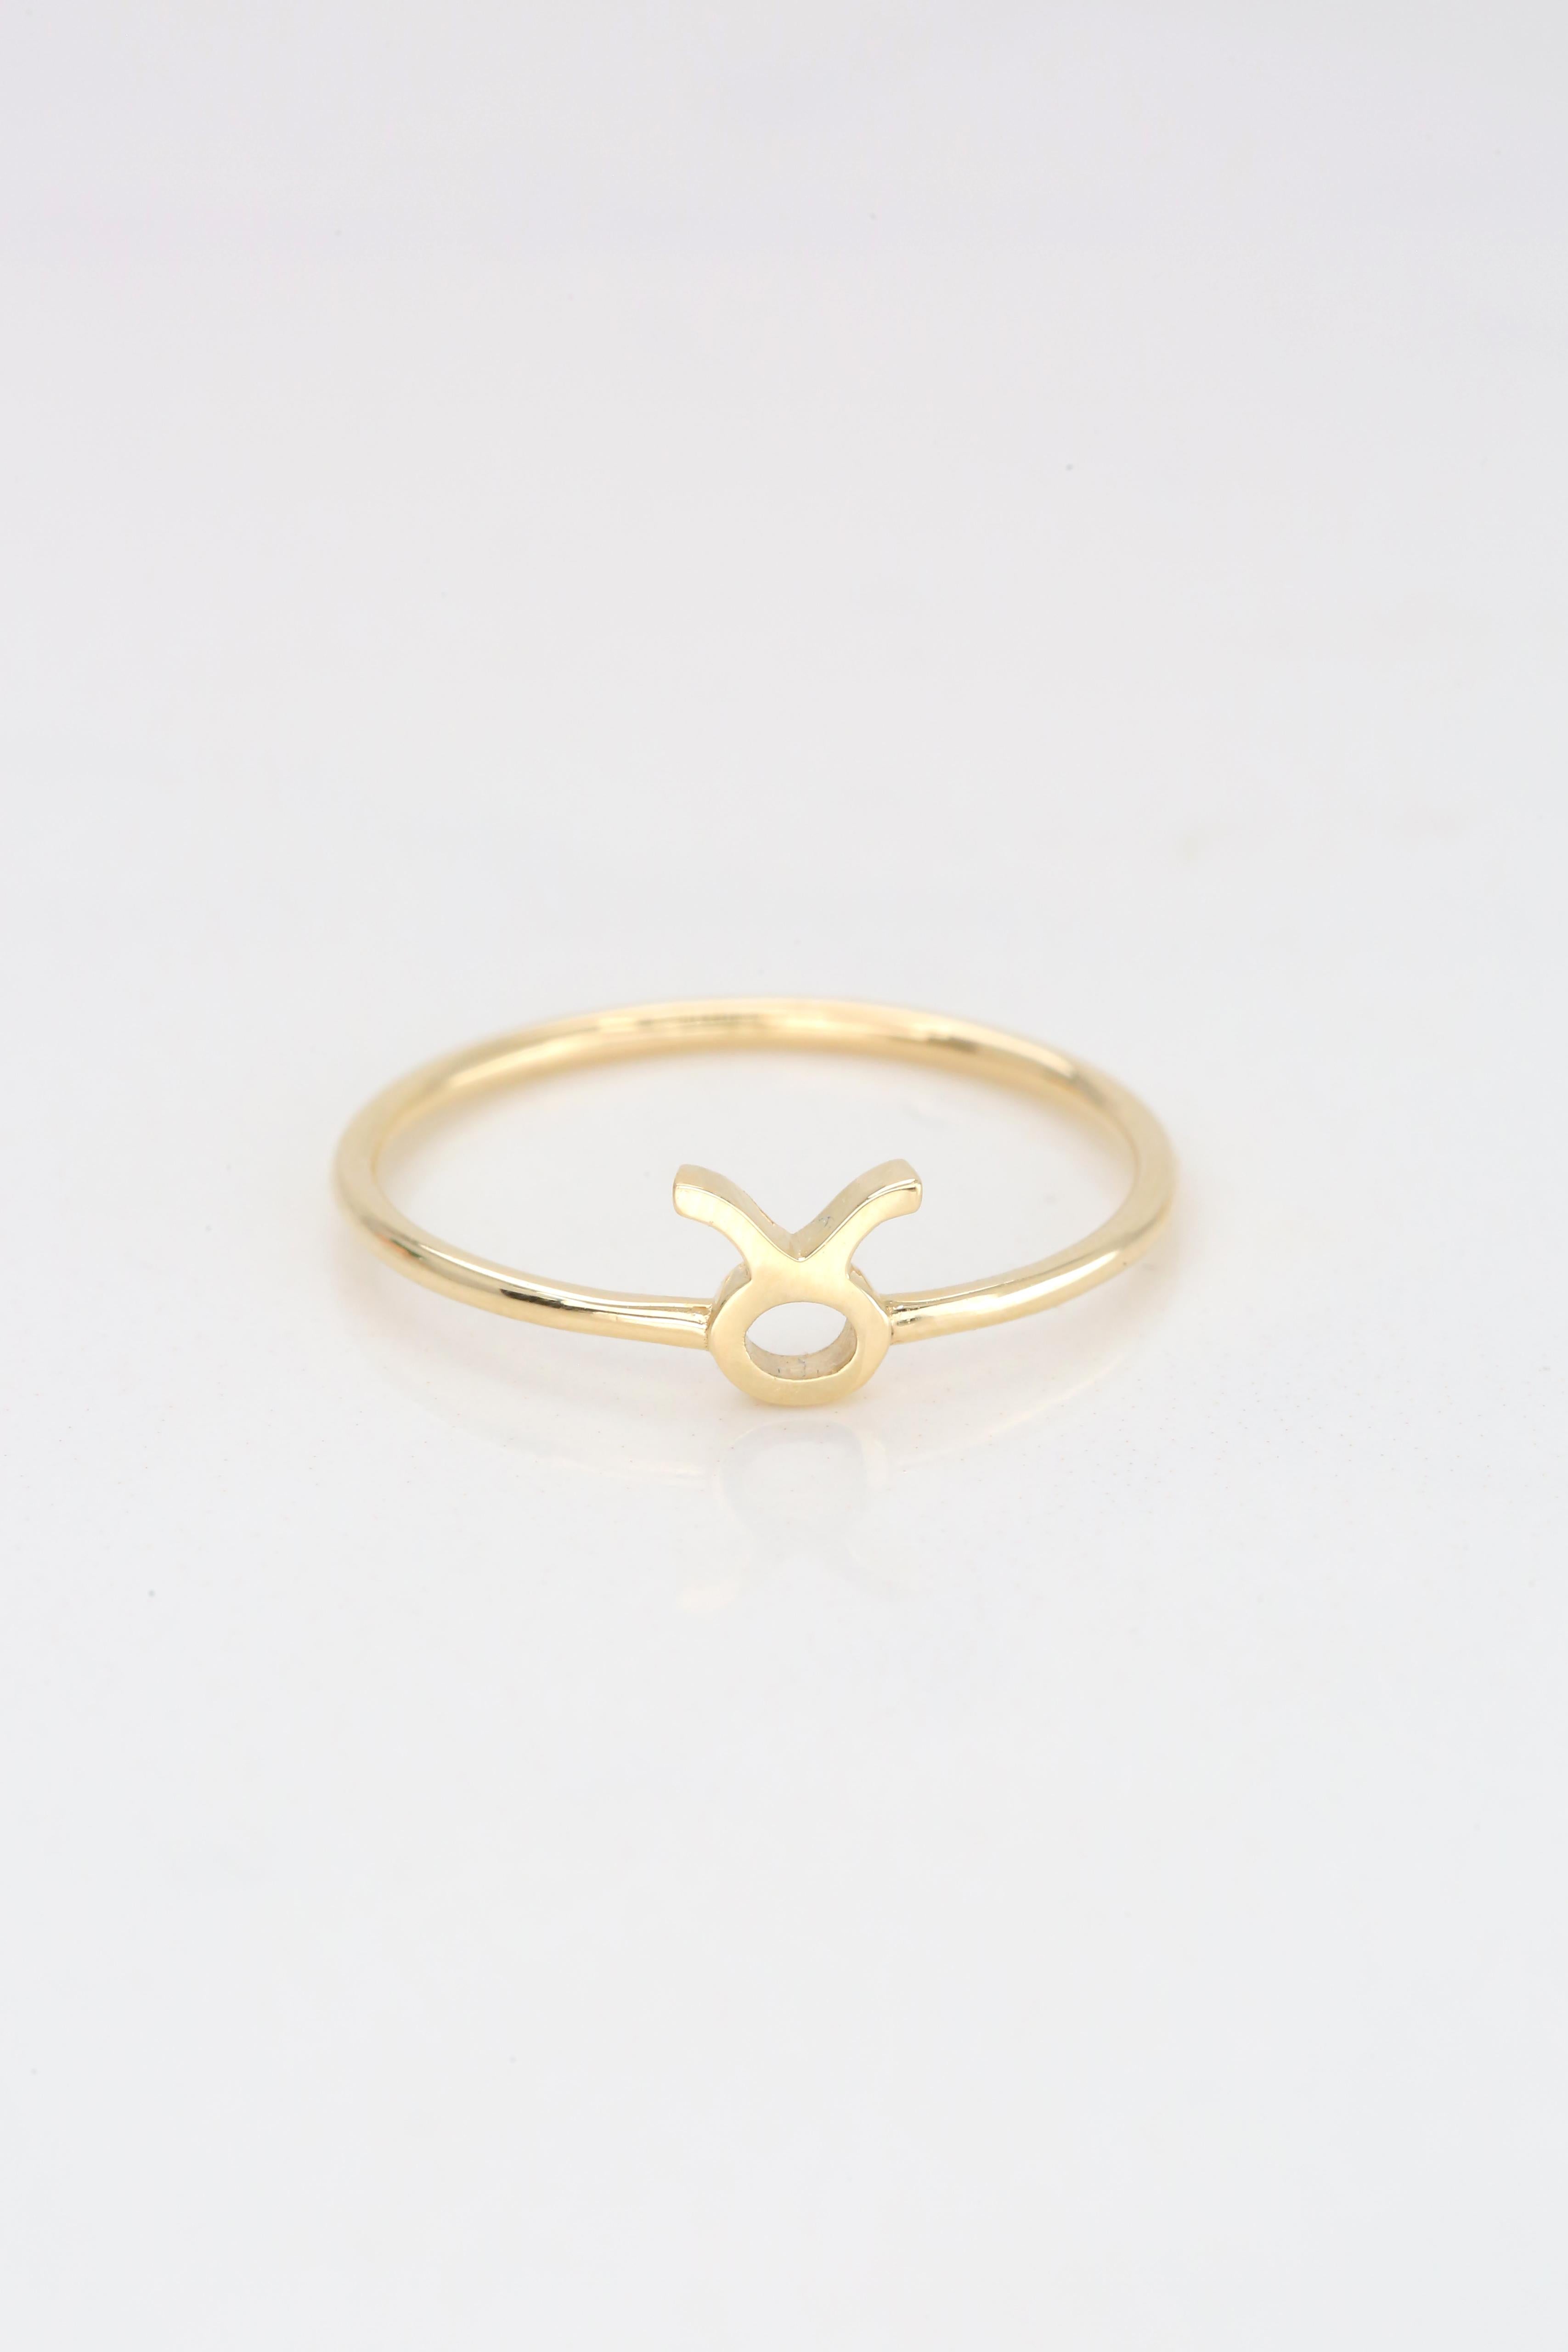 For Sale:  14K Gold Taurus Zodiac Ring, Taurus Sign Zodiac Ring 6